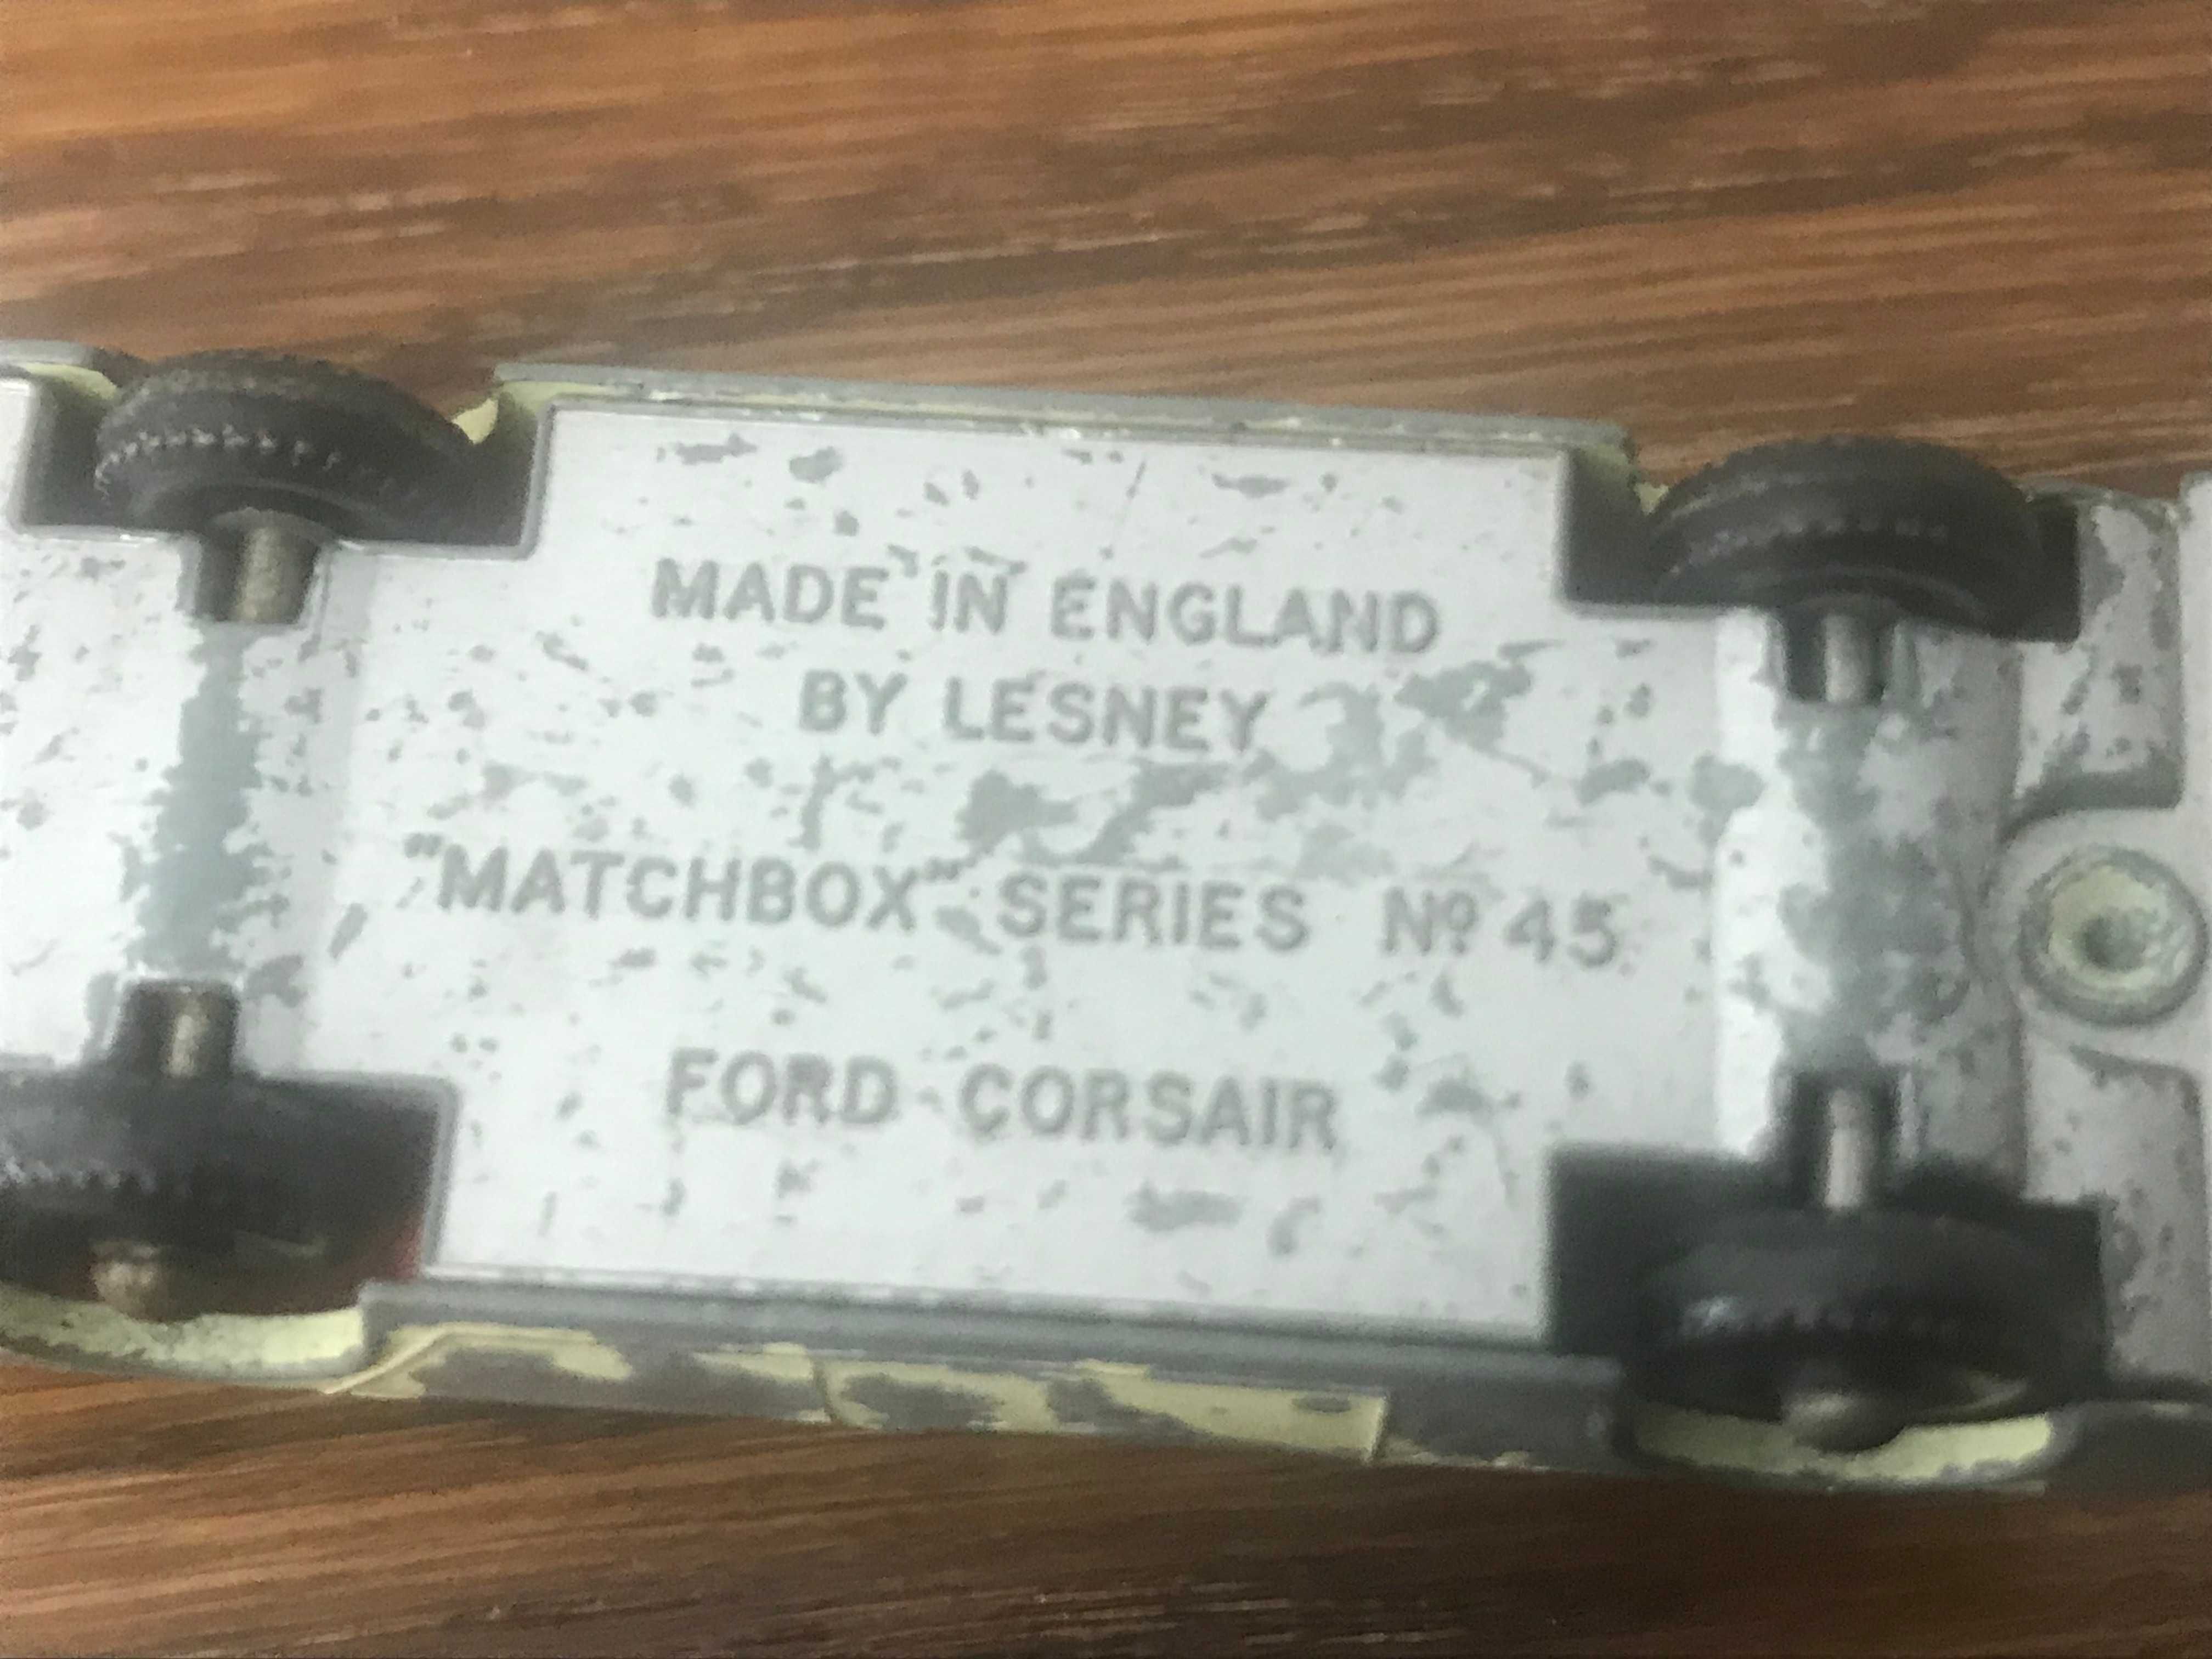 Matchbox Lesney No 45 Ford Corsair resorak